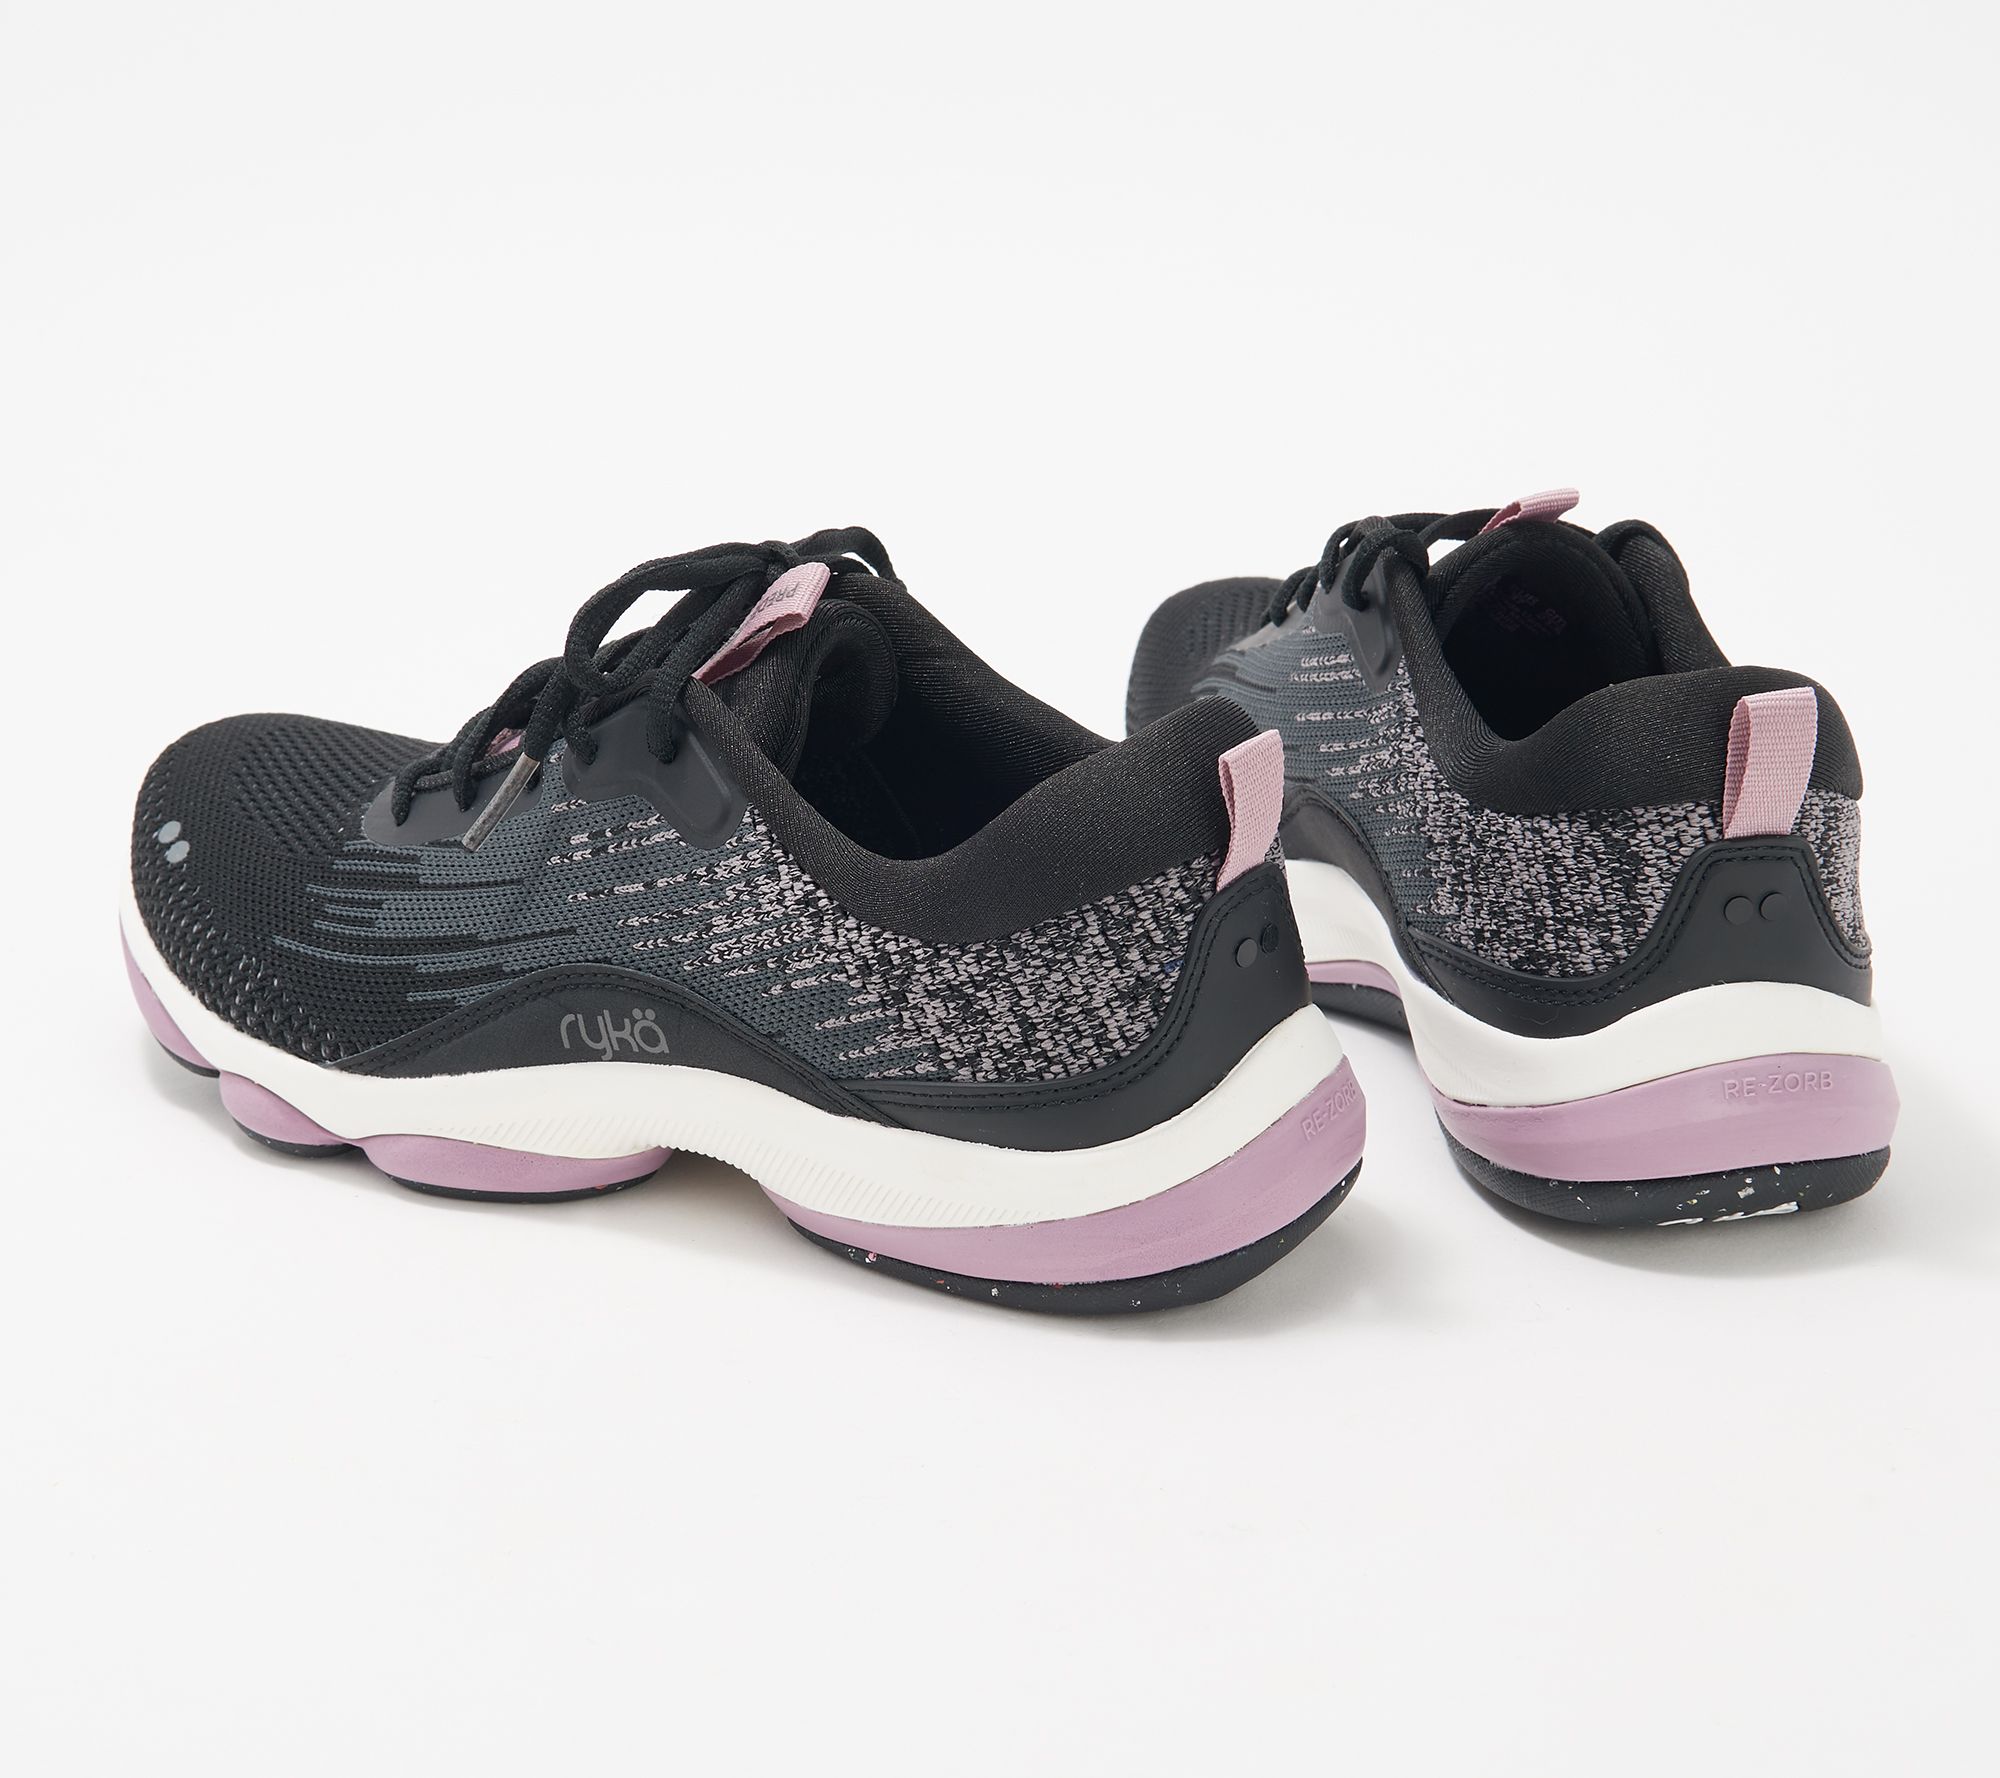 Ryka fEMPOWER Walking Sneakers w/ RE-ZORB - Predecessor - QVC.com